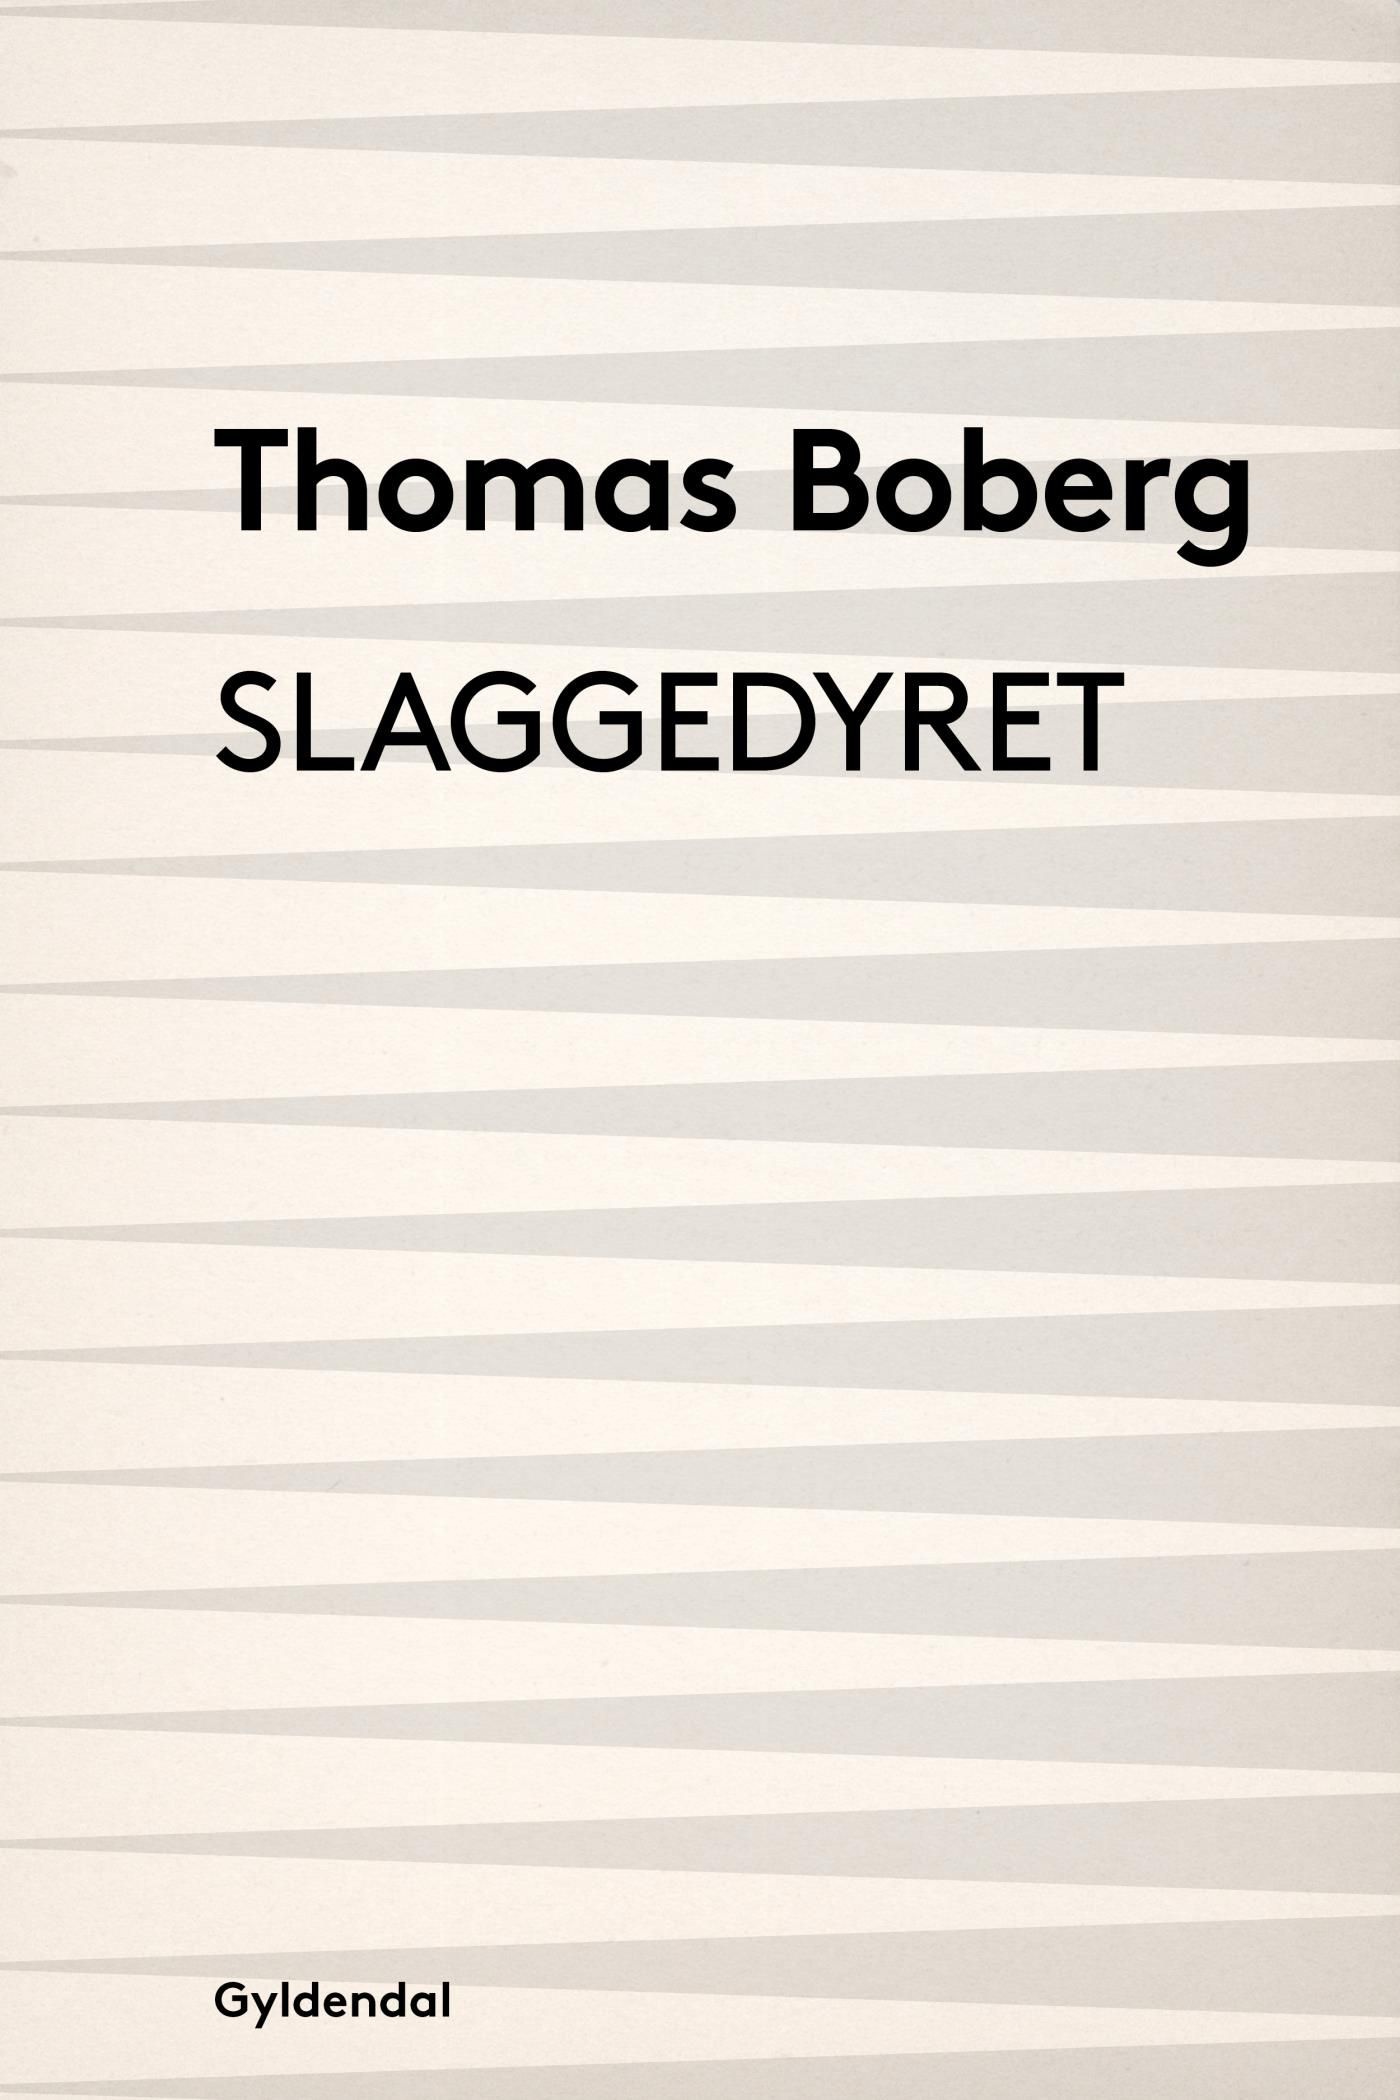 Slaggedyret, eBook by Thomas Boberg